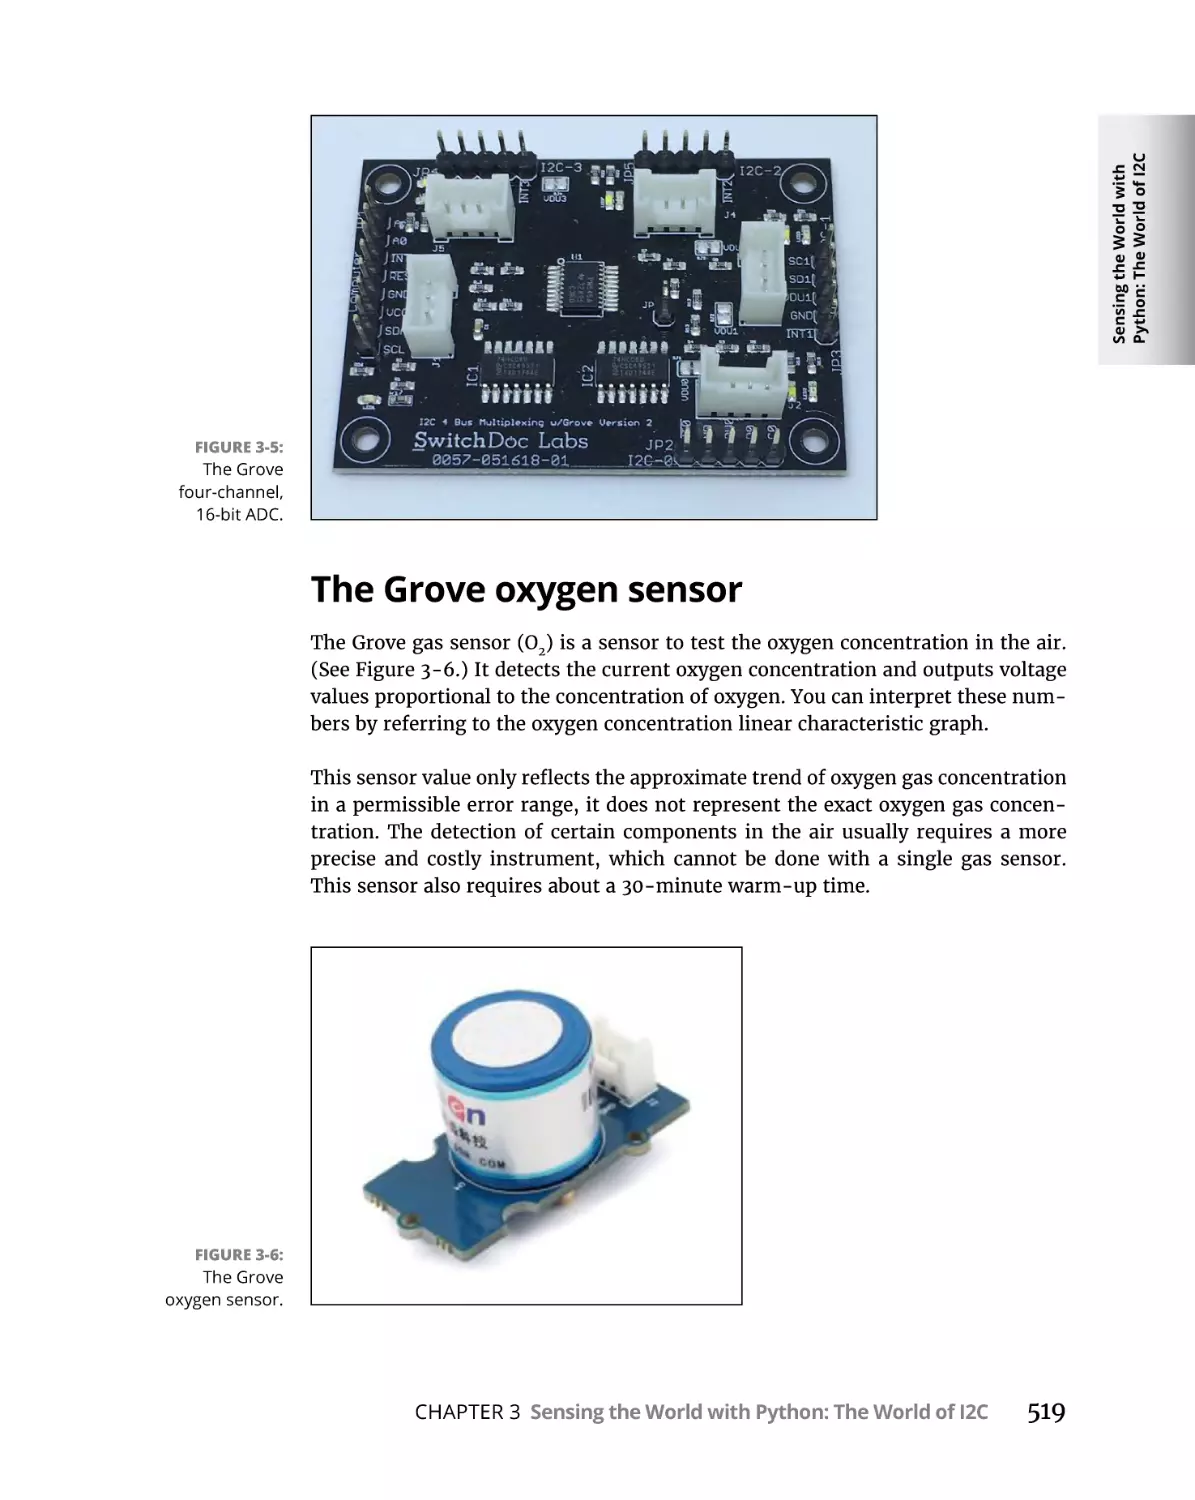 The Grove oxygen sensor